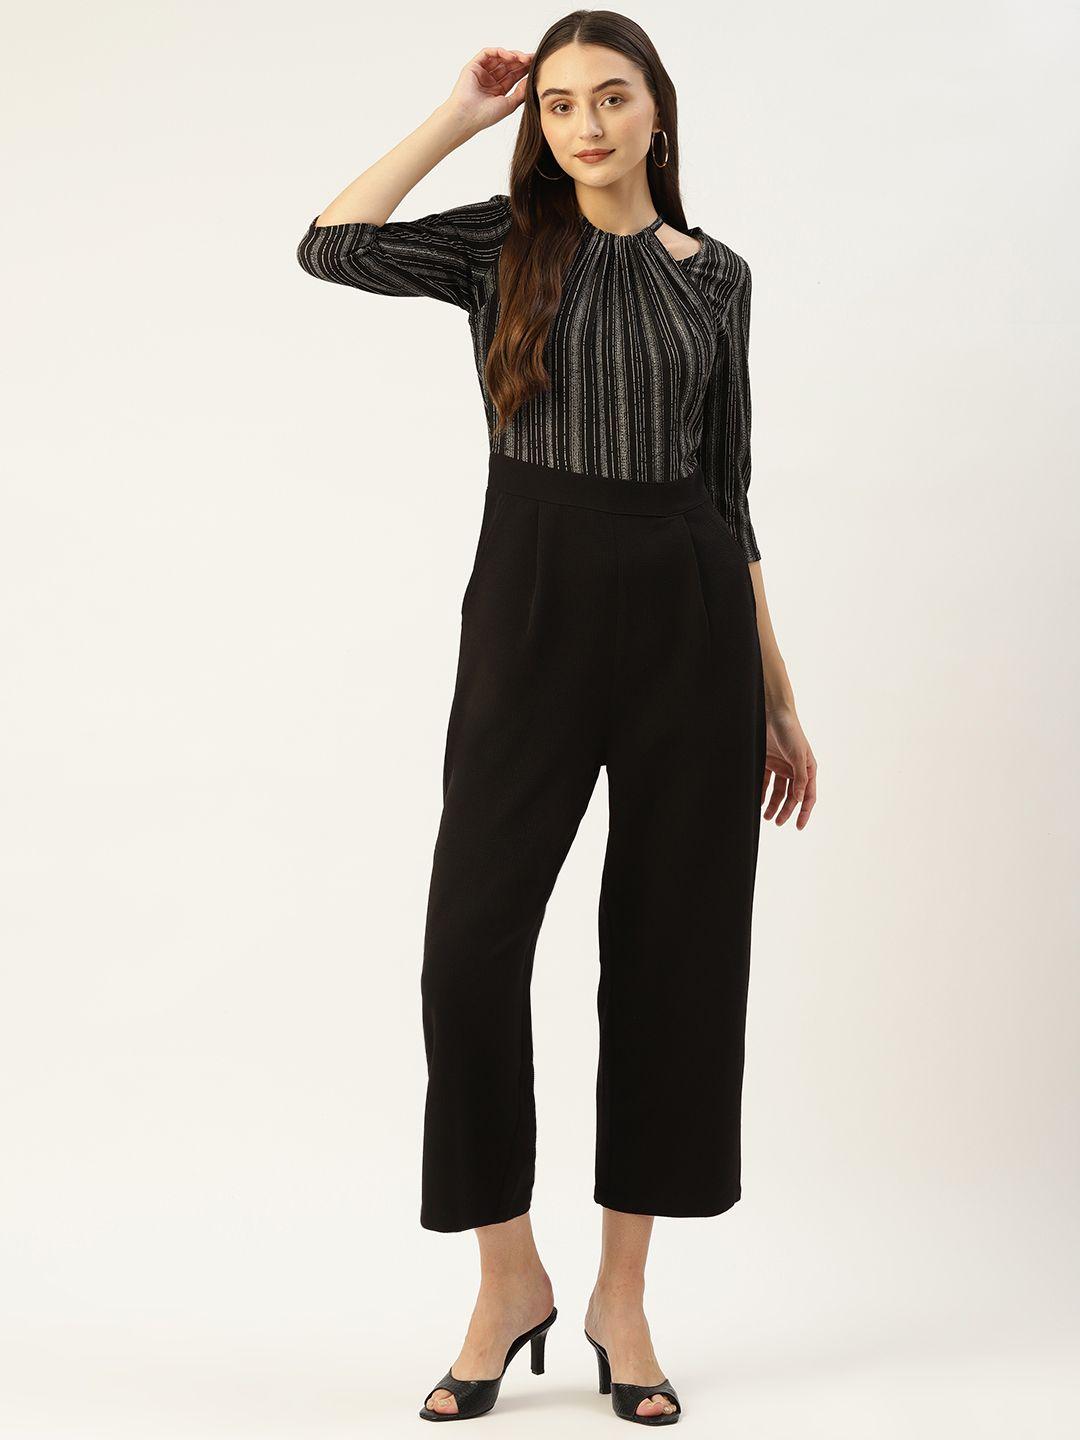 magnetic designs black & white printed culotte jumpsuit